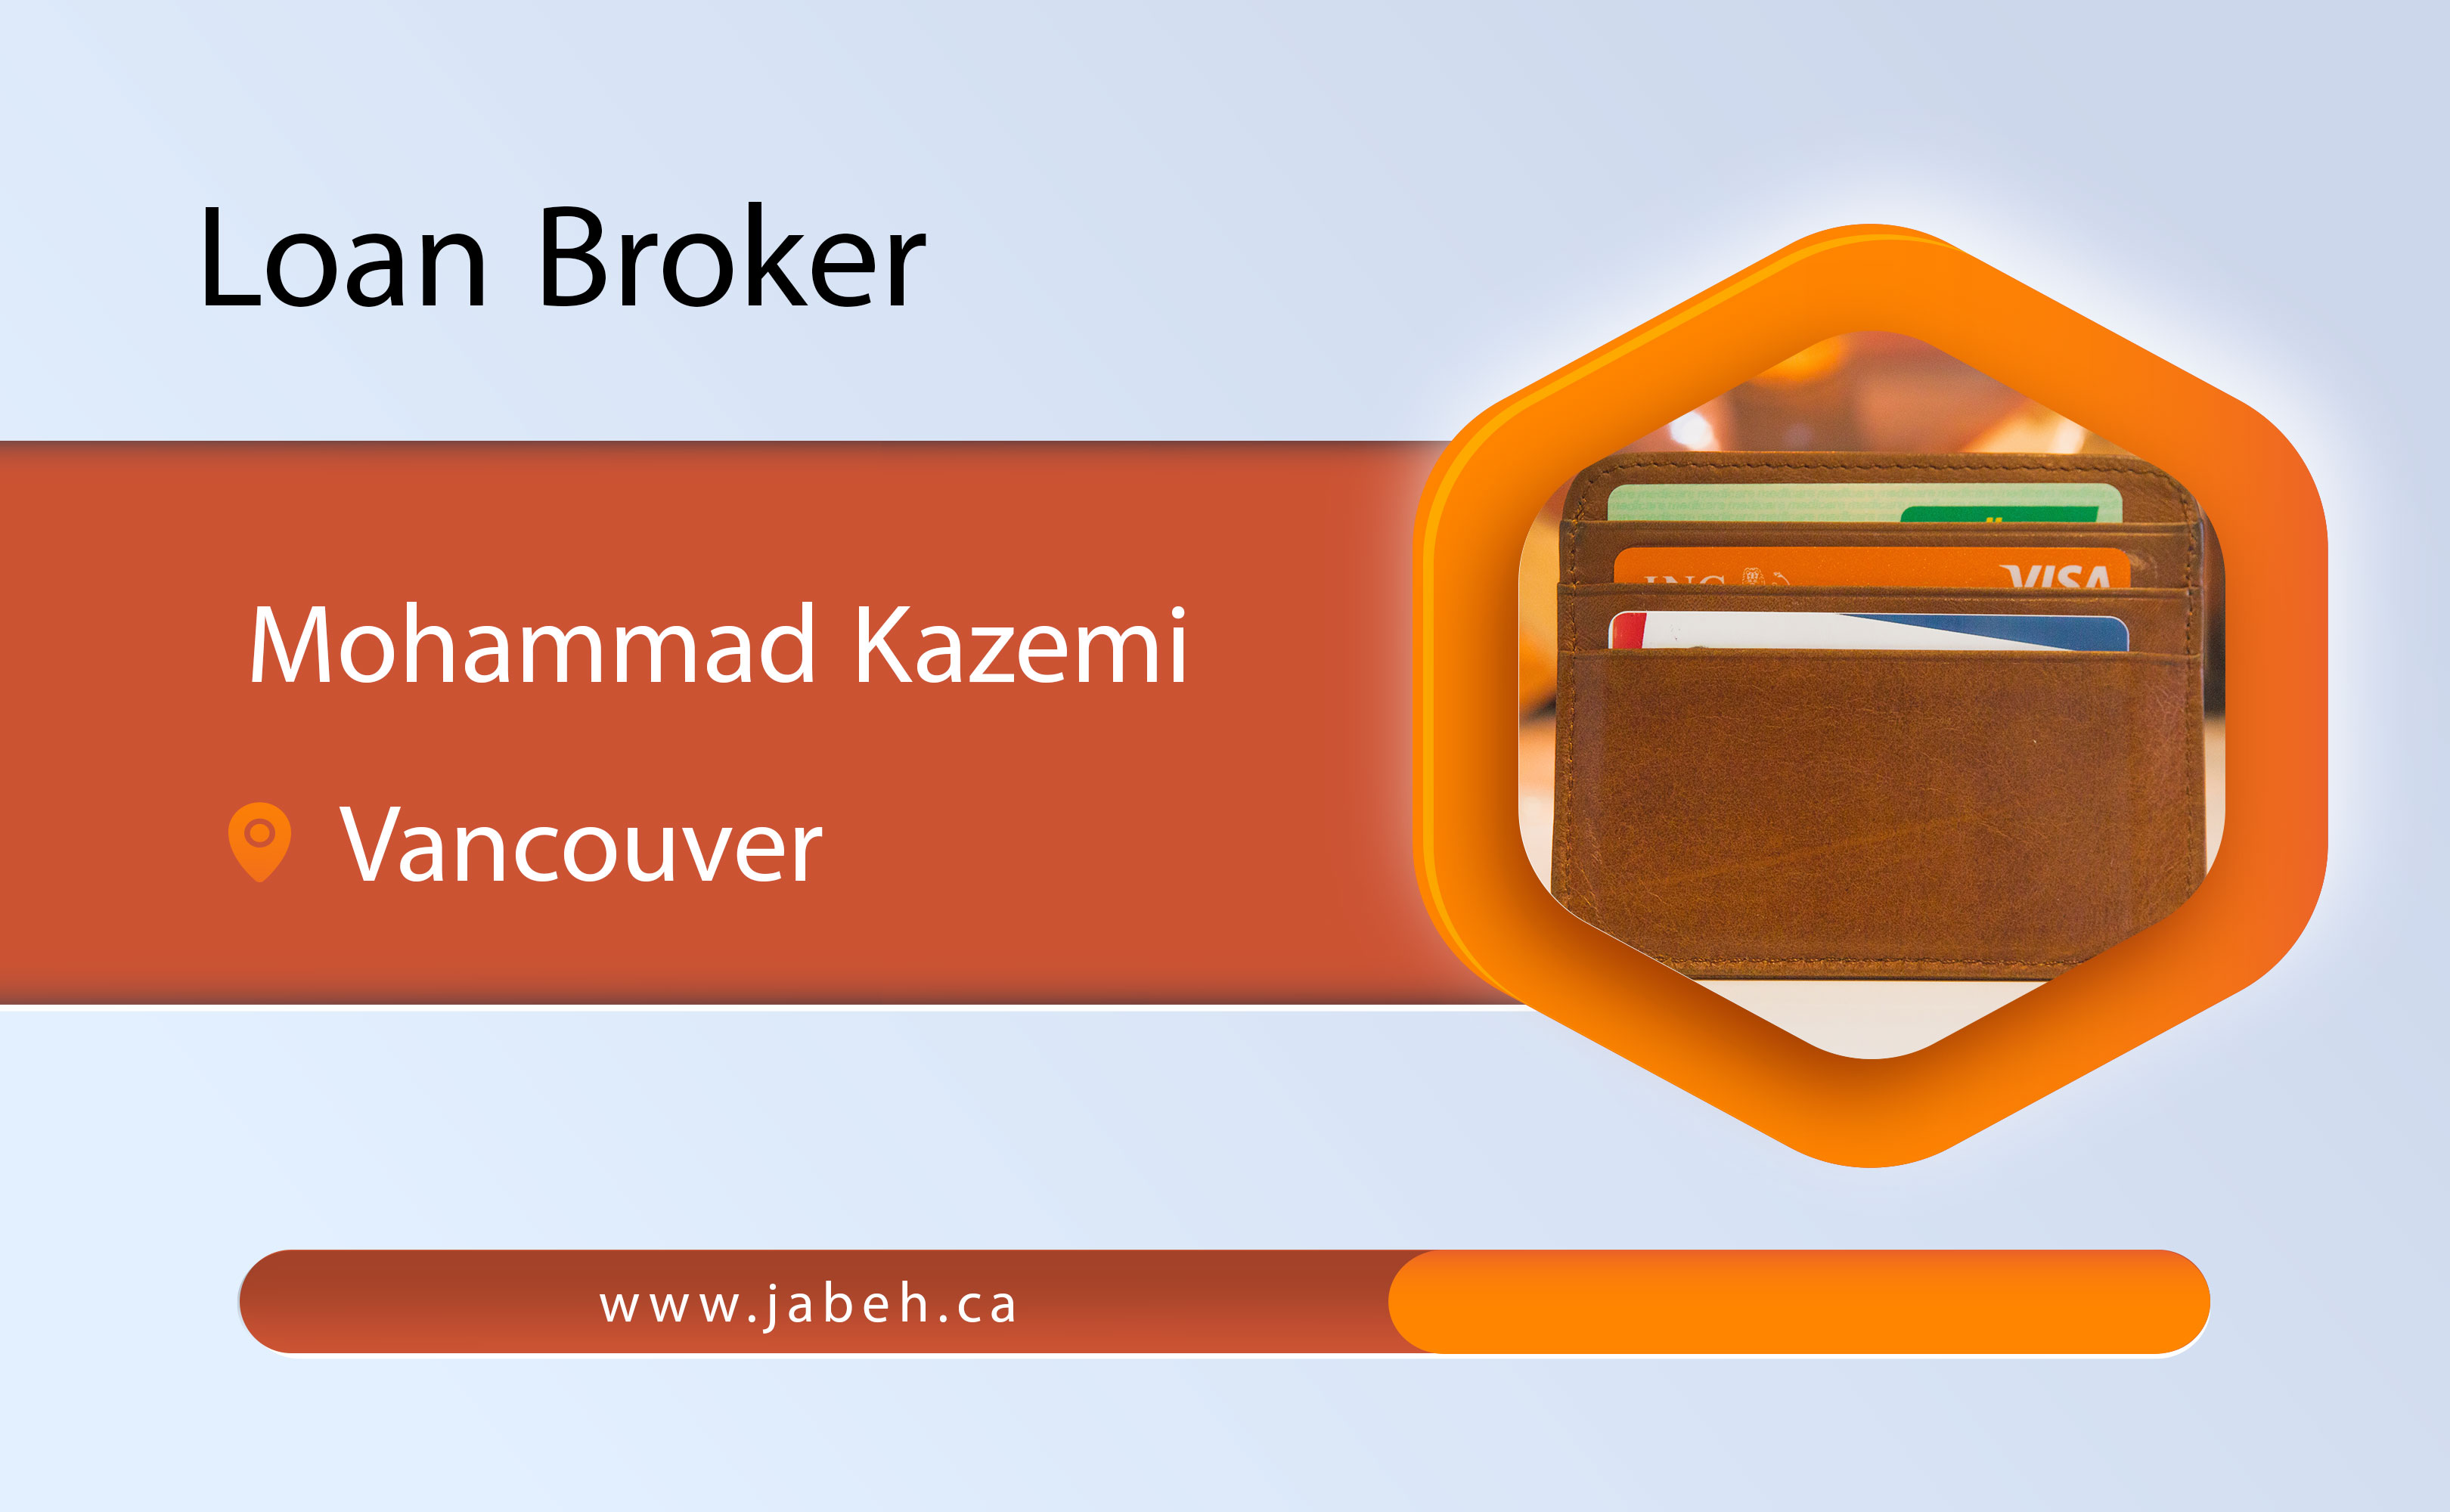 Iranian loan broker Mohammad Kazemi in Vancouver